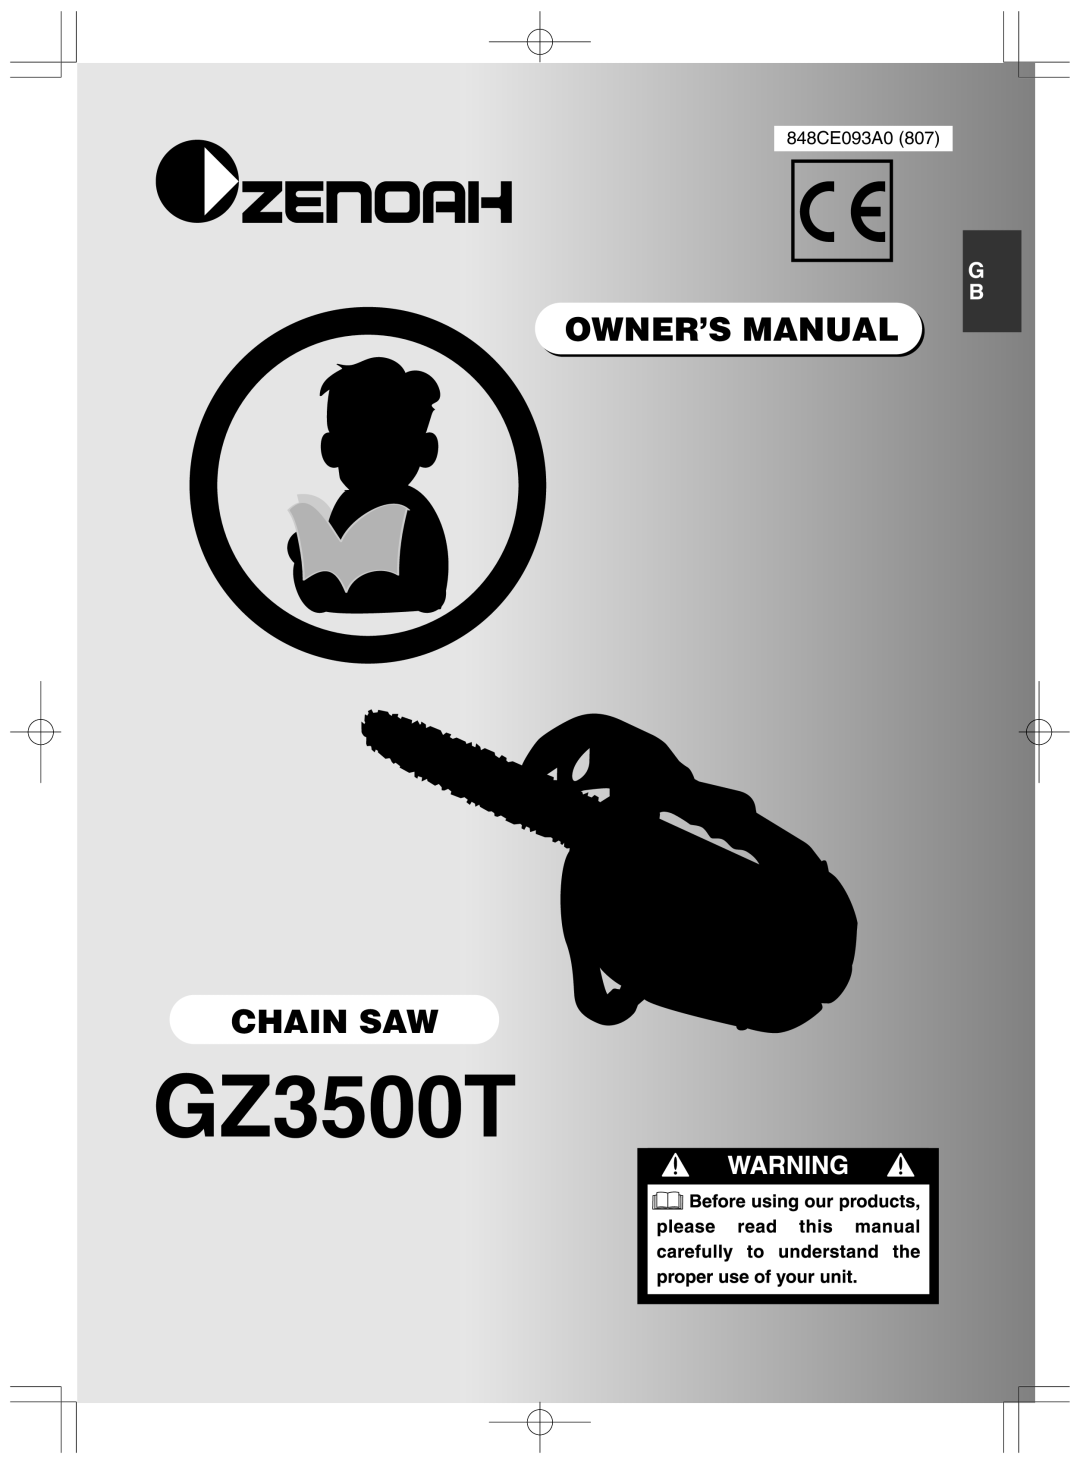 Zenoah GZ3500T owner manual Chain Saw, 848CE093A0 